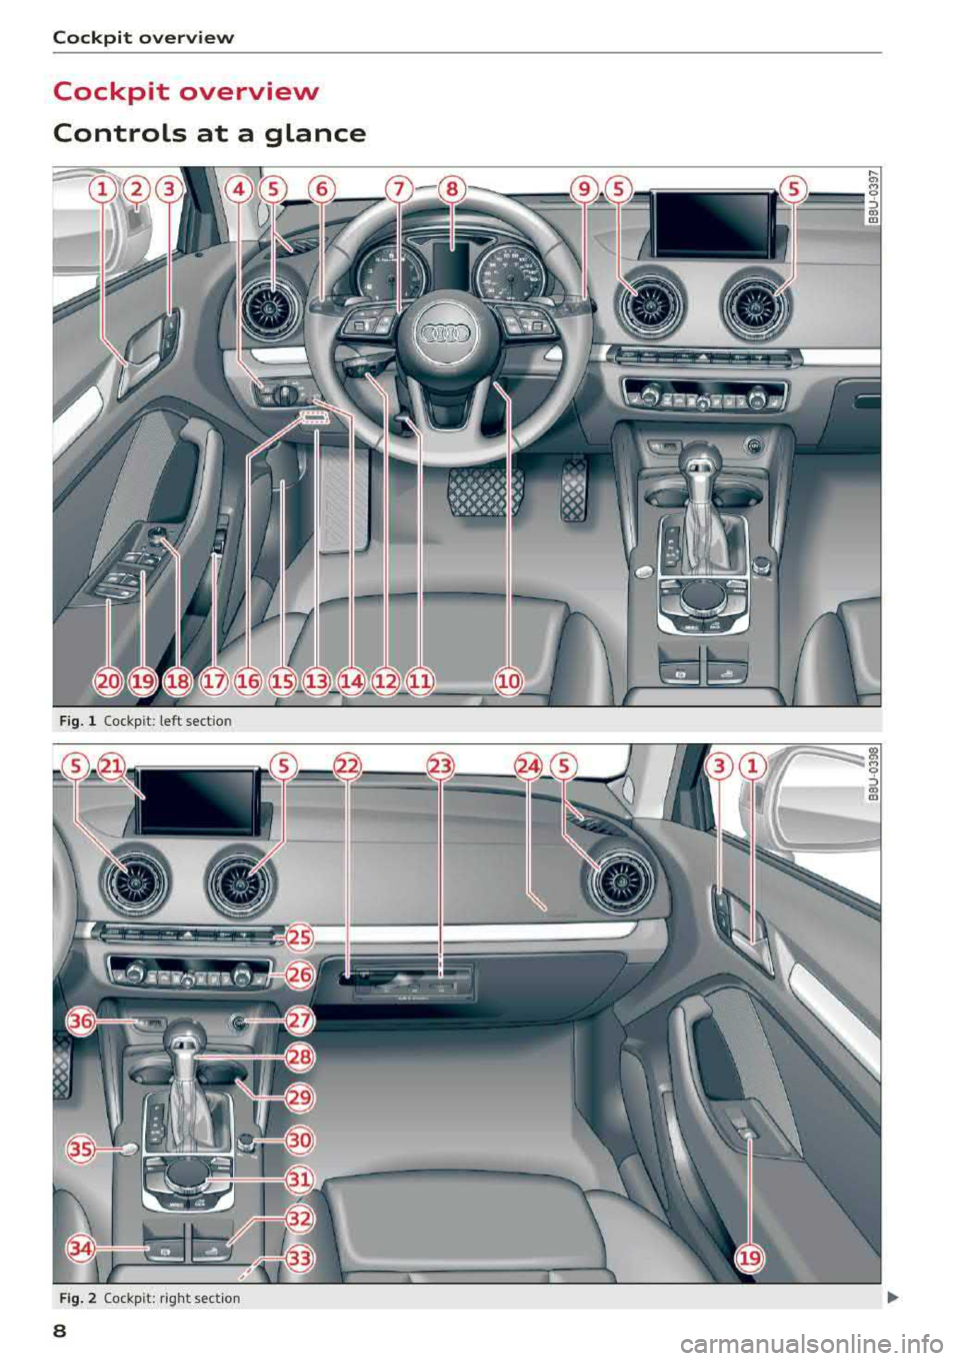 AUDI A3 SEDAN 2018  Owners Manual Cockpit  overview 
Cockpit  overview  
Controls  at  a  glance 
F ig.  1  Cockpit : left  sectio n 
F ig.  2  Cockpit:  r ig ht sect ion 
8 
,-.. a, M 9 
sl DJ  